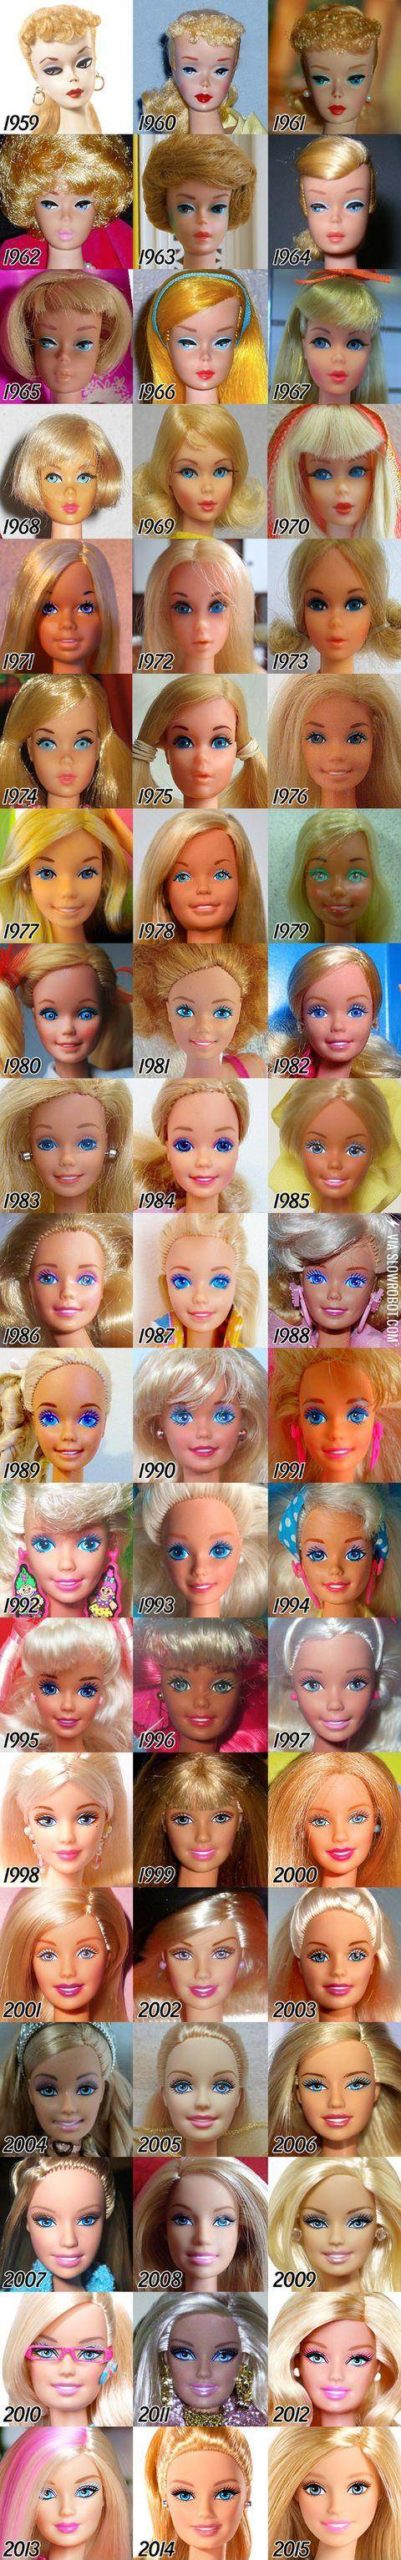 Barbie+1959+%26%238211%3B+2015